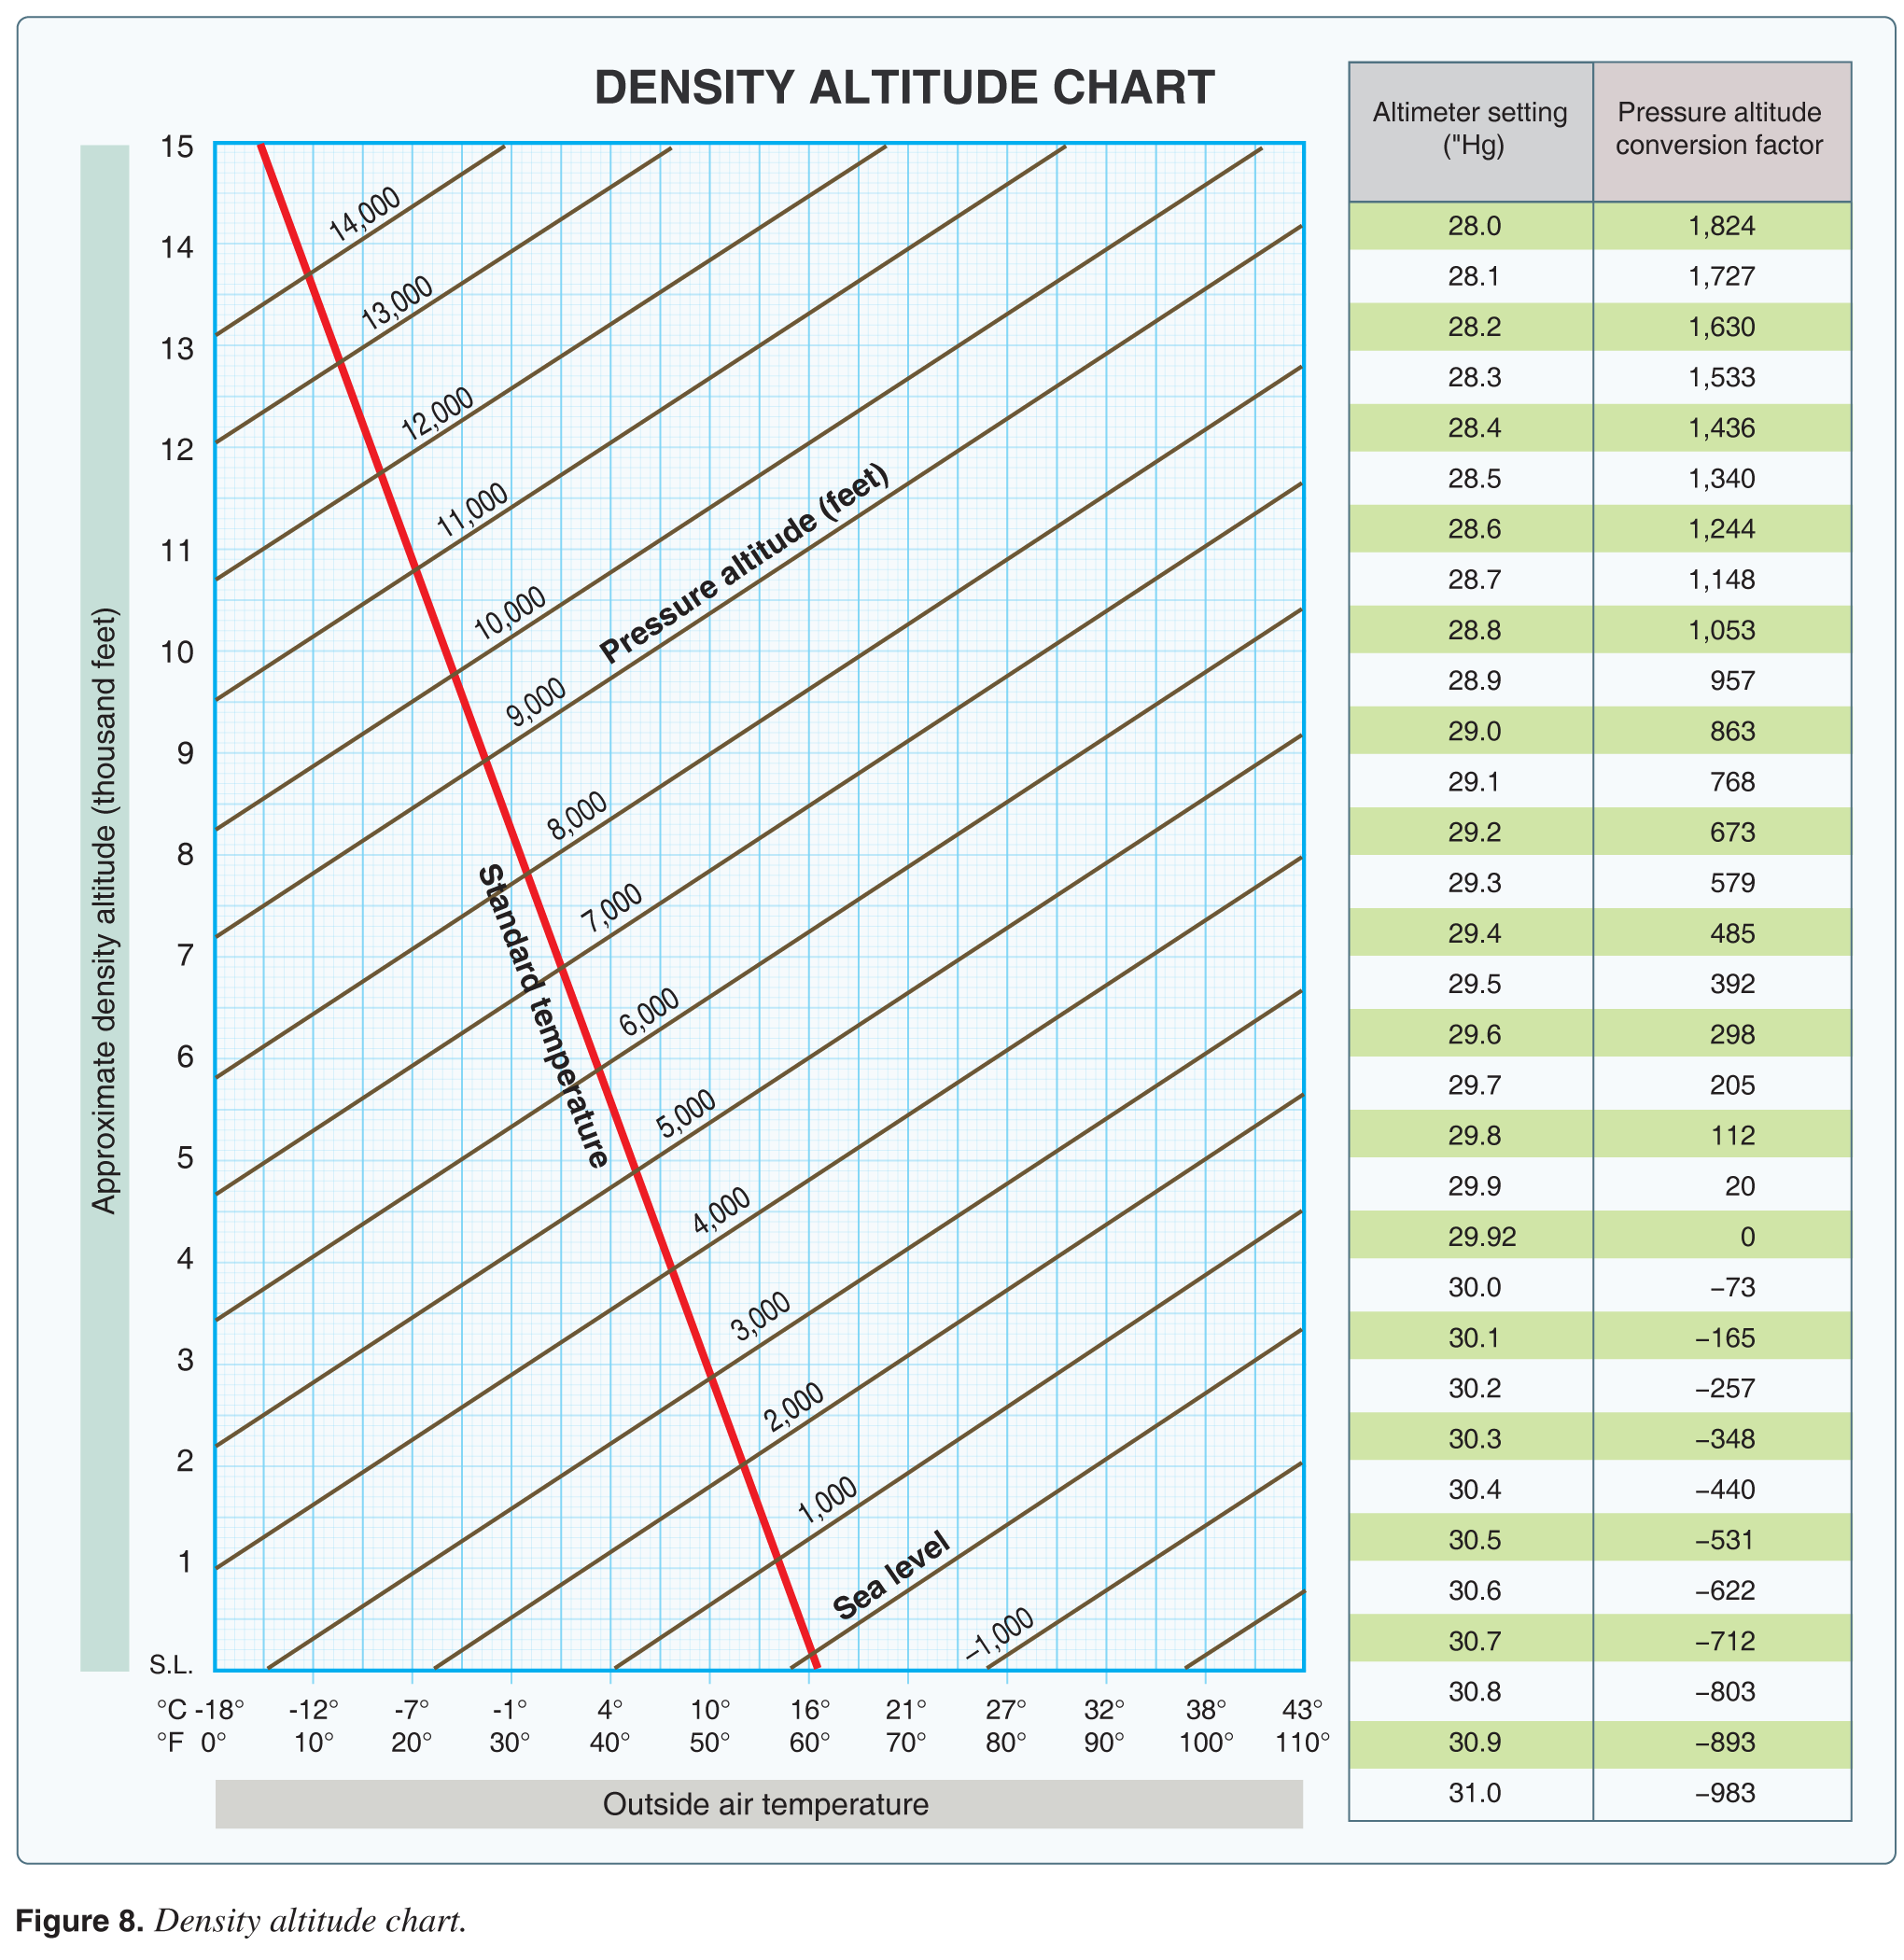 CFI Brief: Density Altitude – Learn to Fly Blog - ASA (Aviation ...